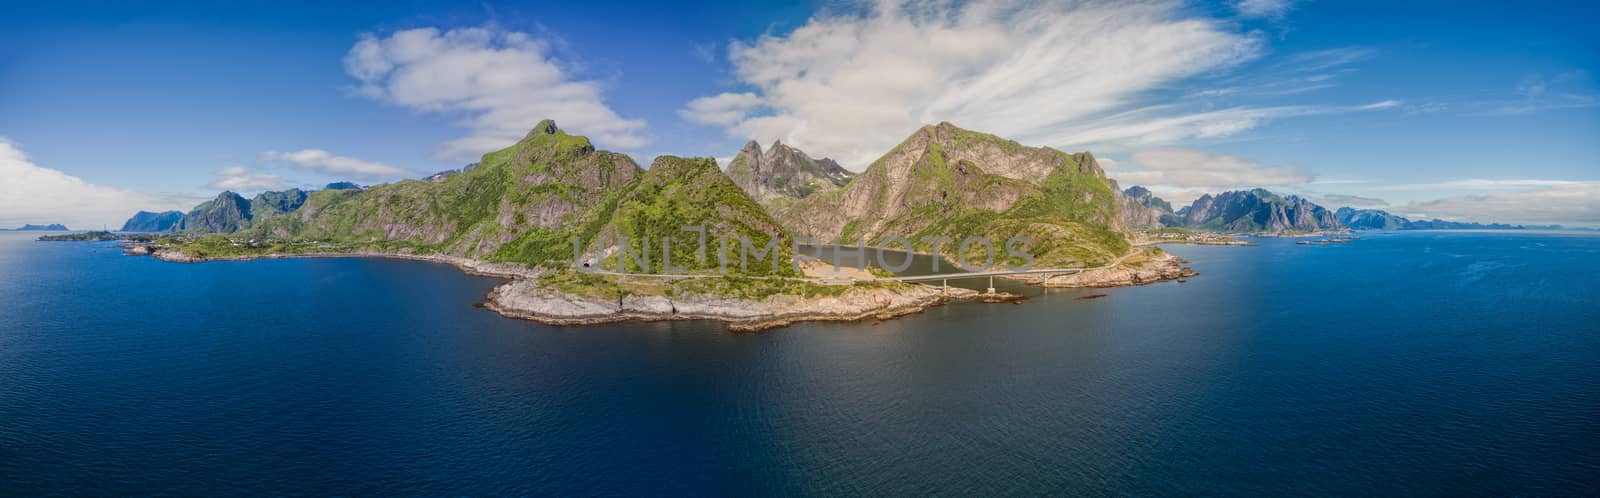 Aerial panorama of Lofoten islands in Norway